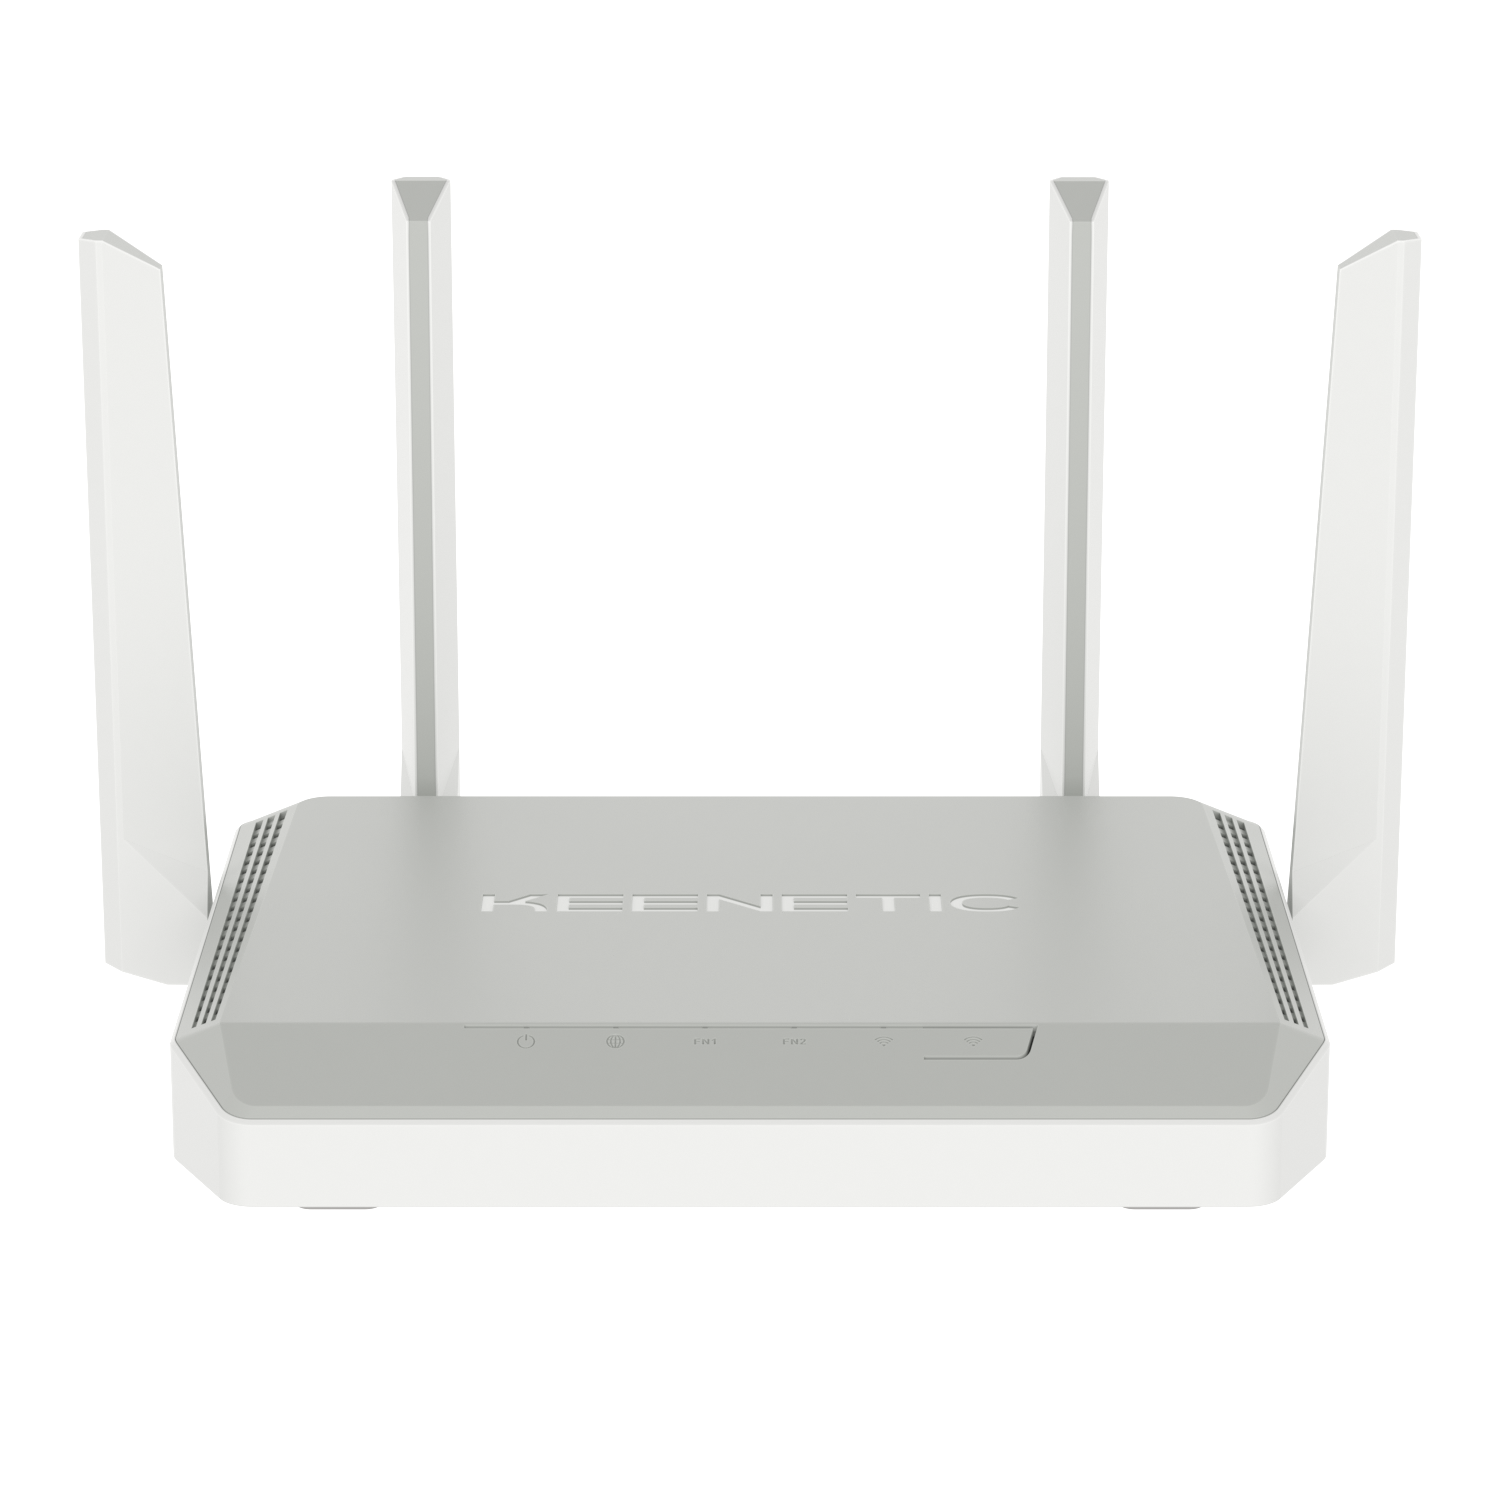 Wi-Fi роутер KEENETIC Giant, AC1300, белый [kn-2610]